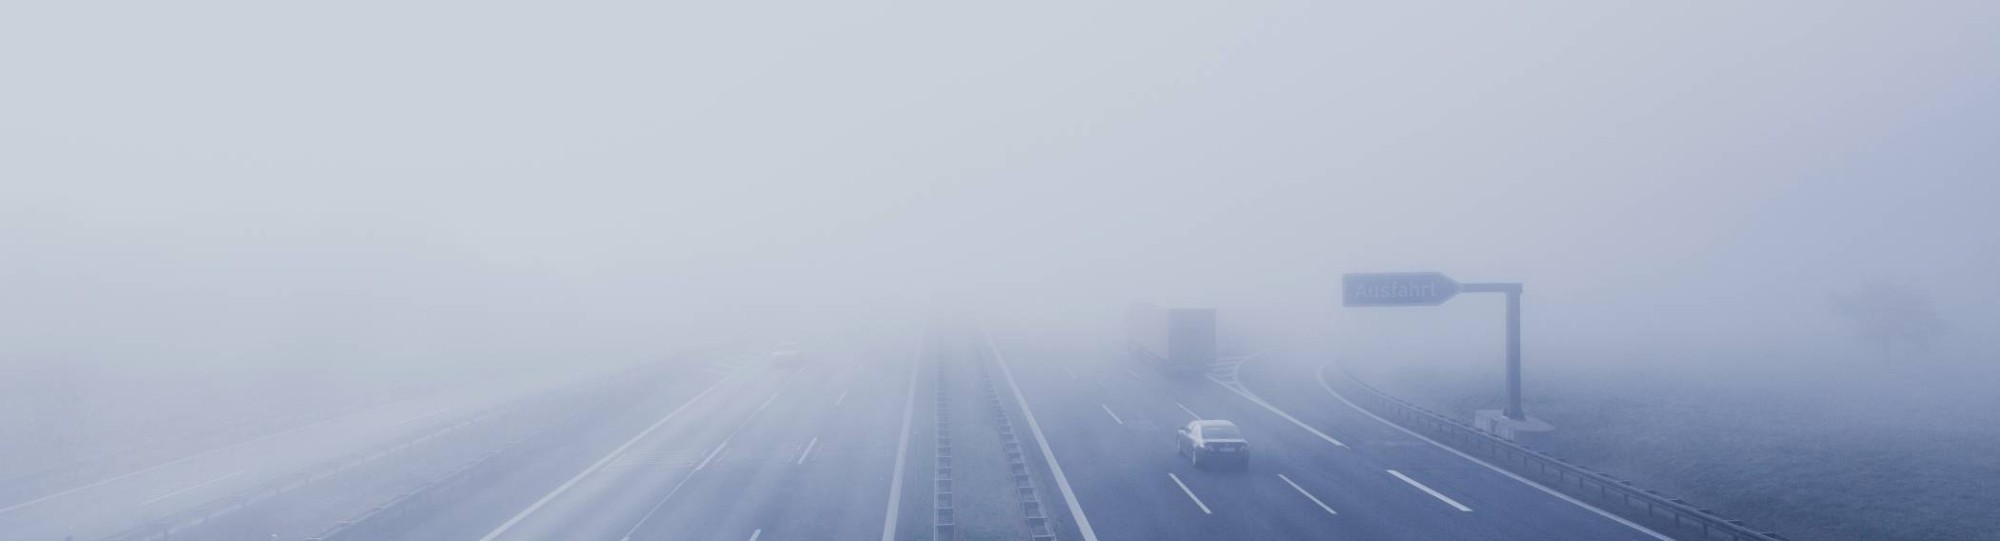 Stockfoto auto's in de mist